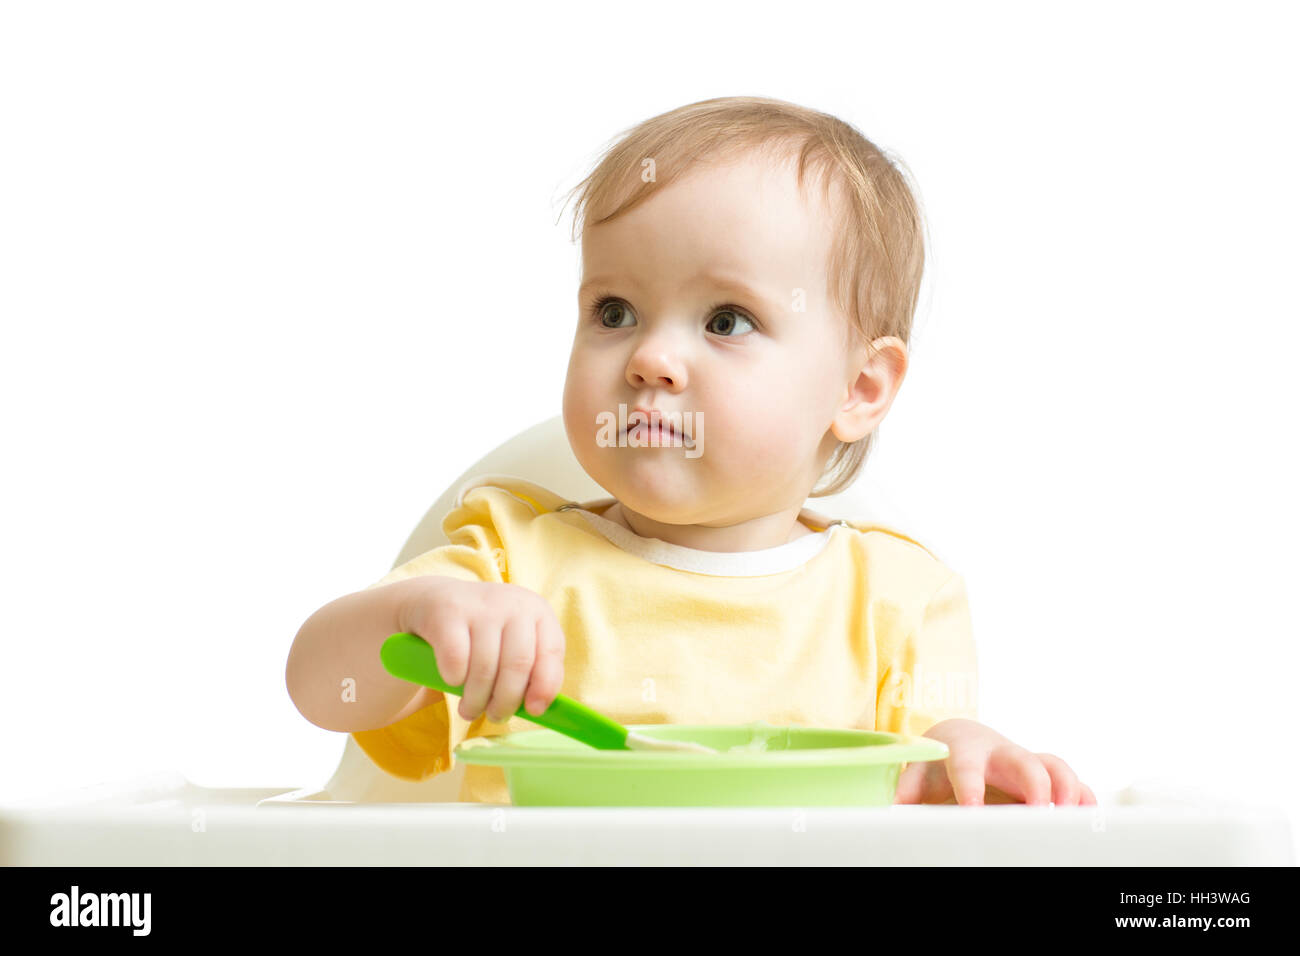 Baby girl eating yogurt or puree isolated on white Stock Photo